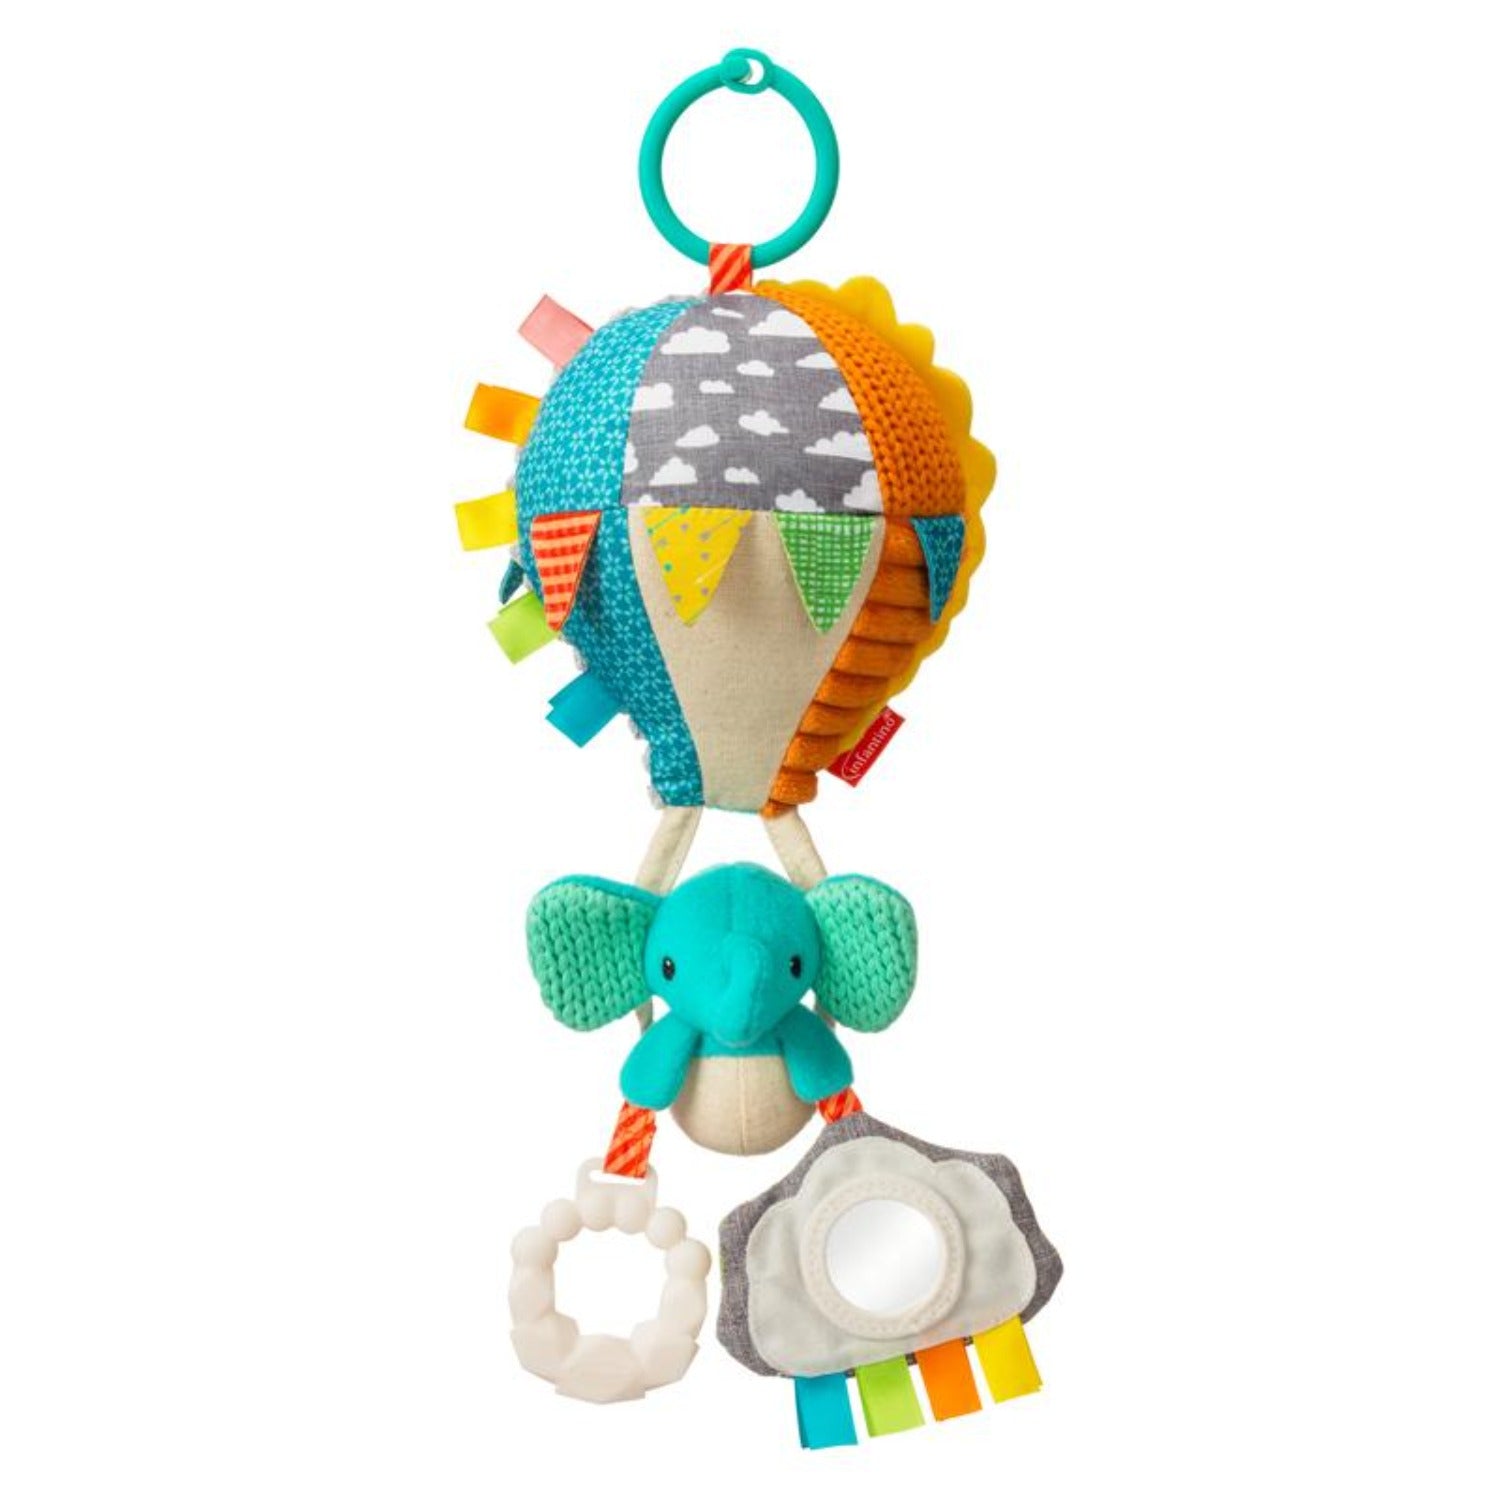 Infantino hot air balloon baby sensory toy